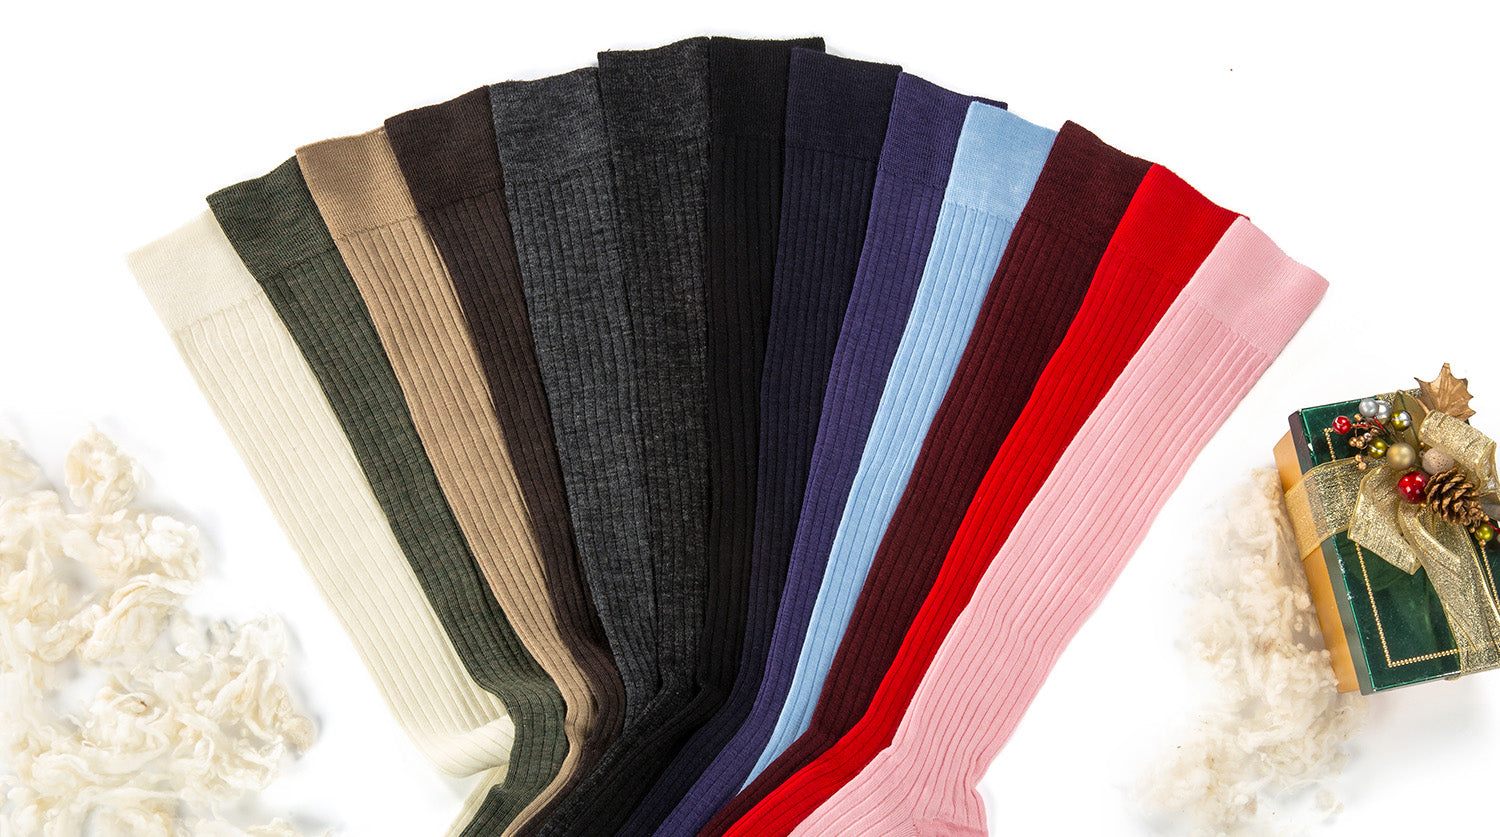 thirteen colors of merino wool over the calf dress socks from Boardroom Socks